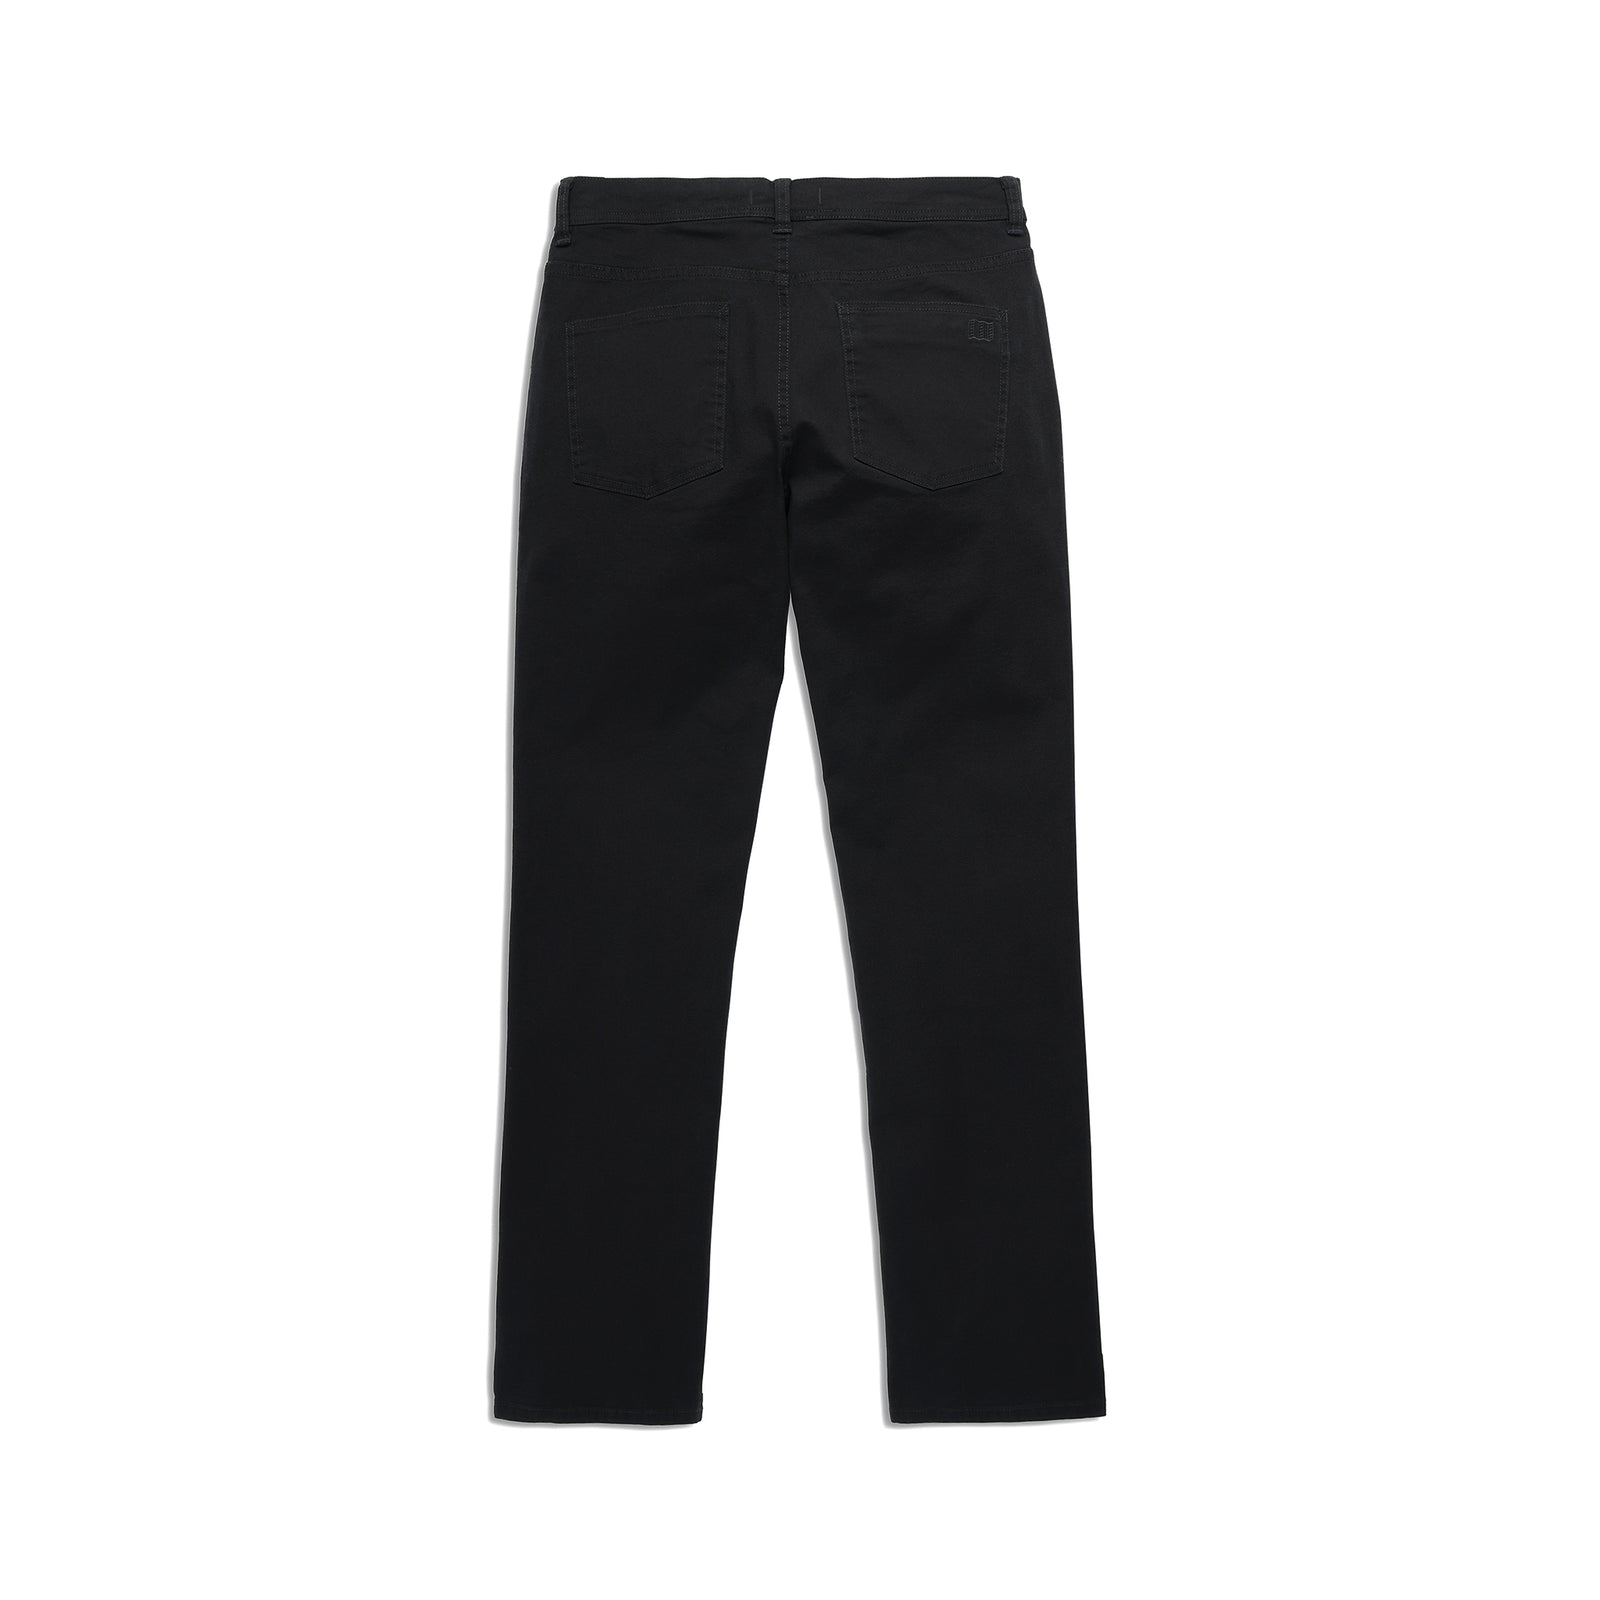 Topo Designs Dirt 5-Pocket Pants in "Black"